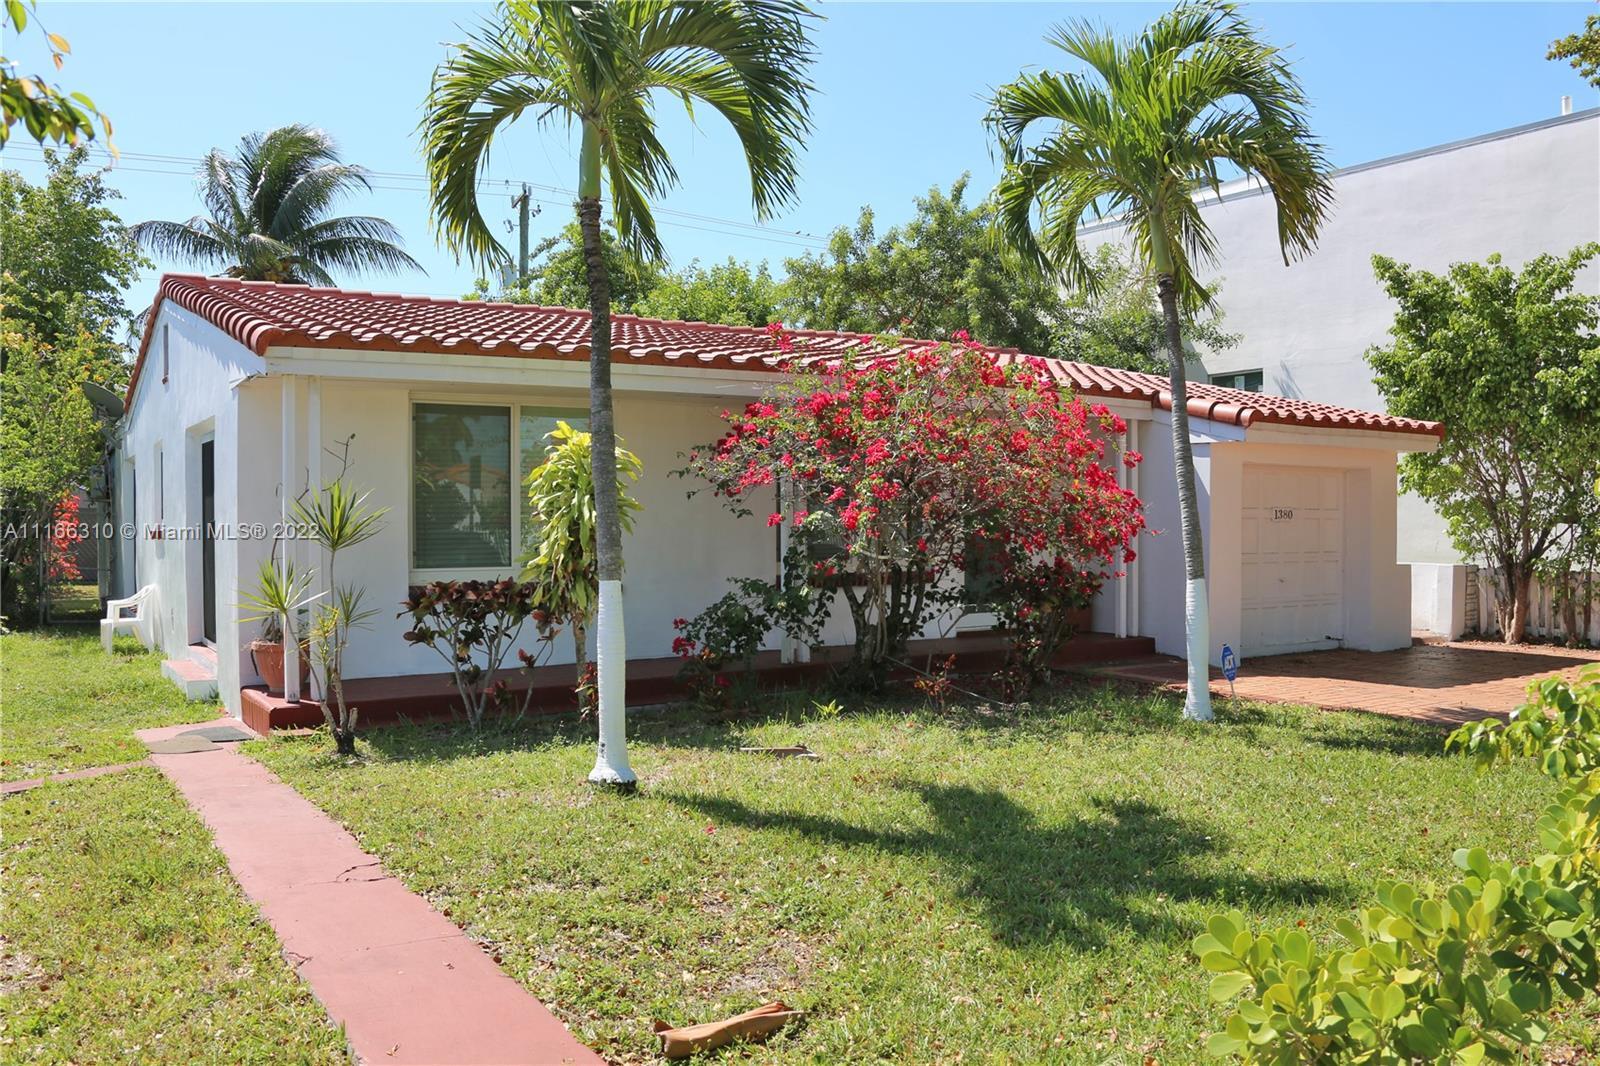 Spectacular and brilliant Miami Beach single family home: 5 beds, 3 bath plus studio, new hurricane 